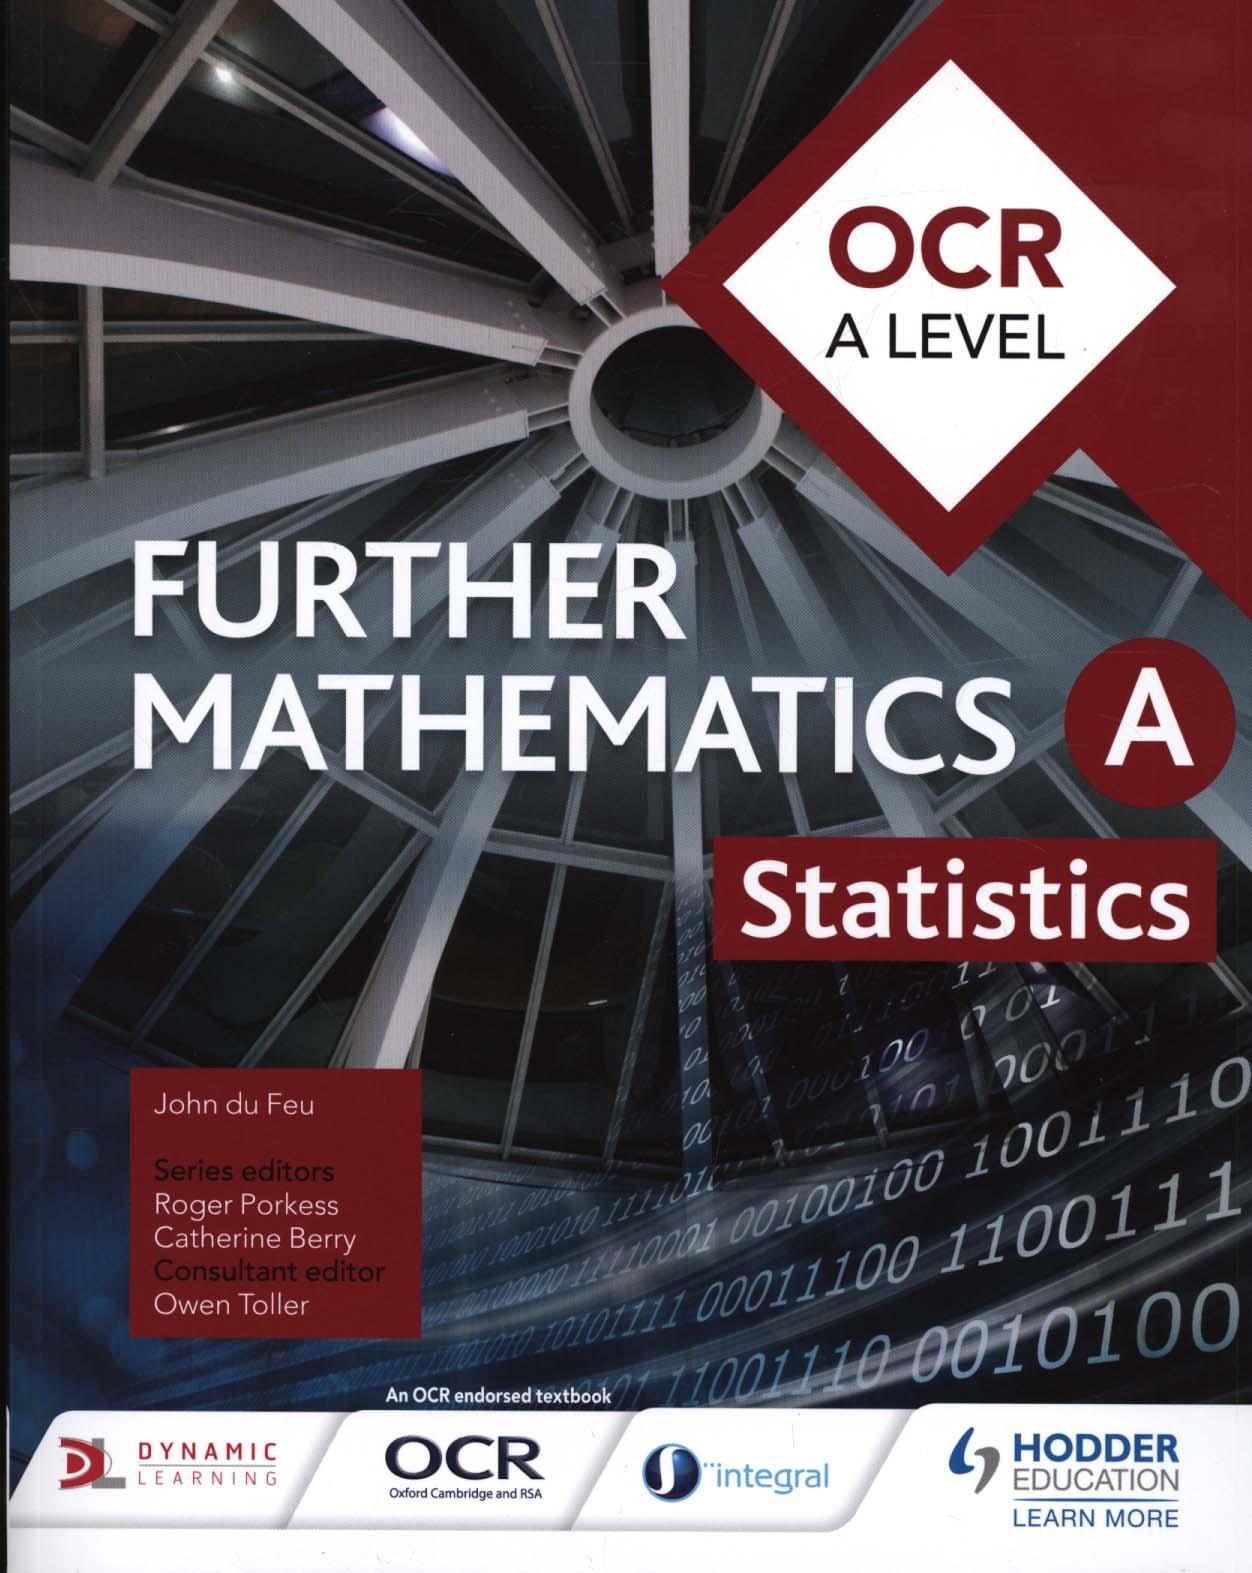 OCR A Level Further Mathematics Statistics